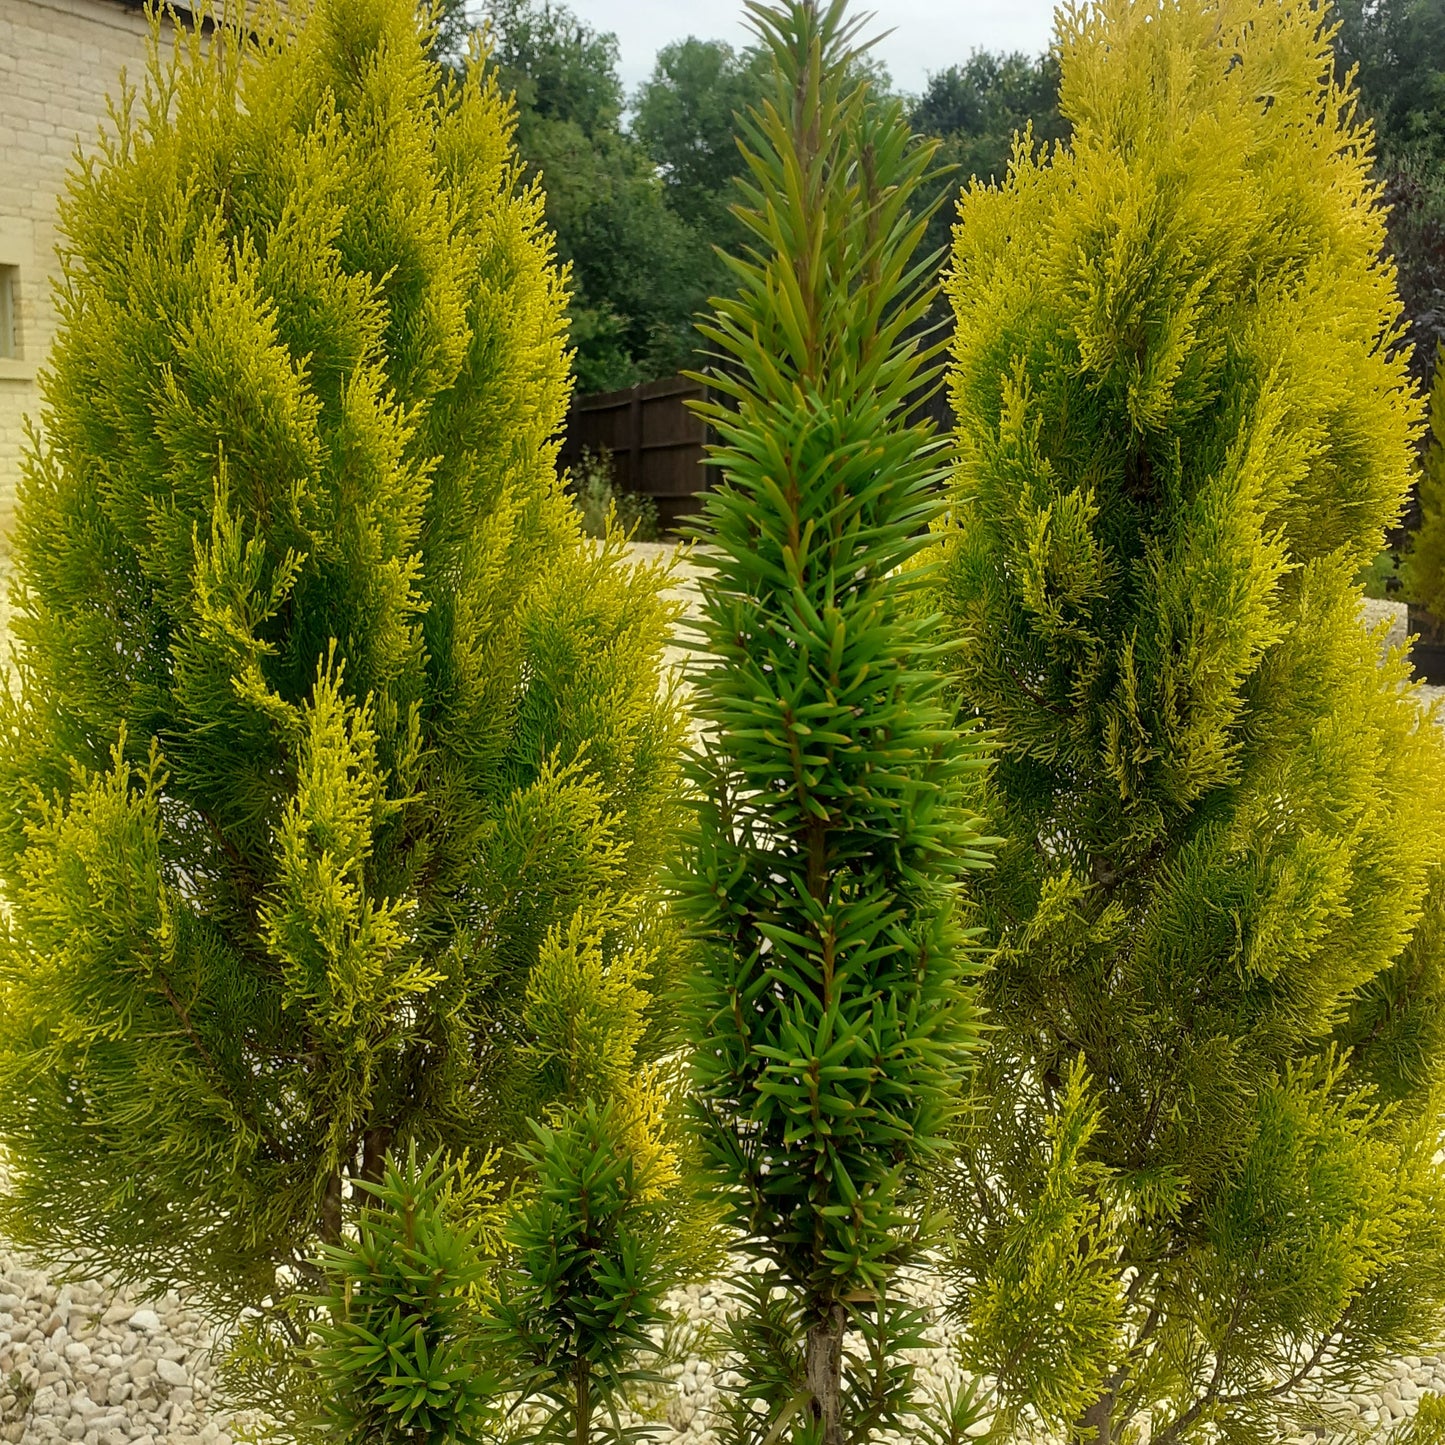 Thuja orientalis "Pyramidalis Aurea" - Pillar fir 